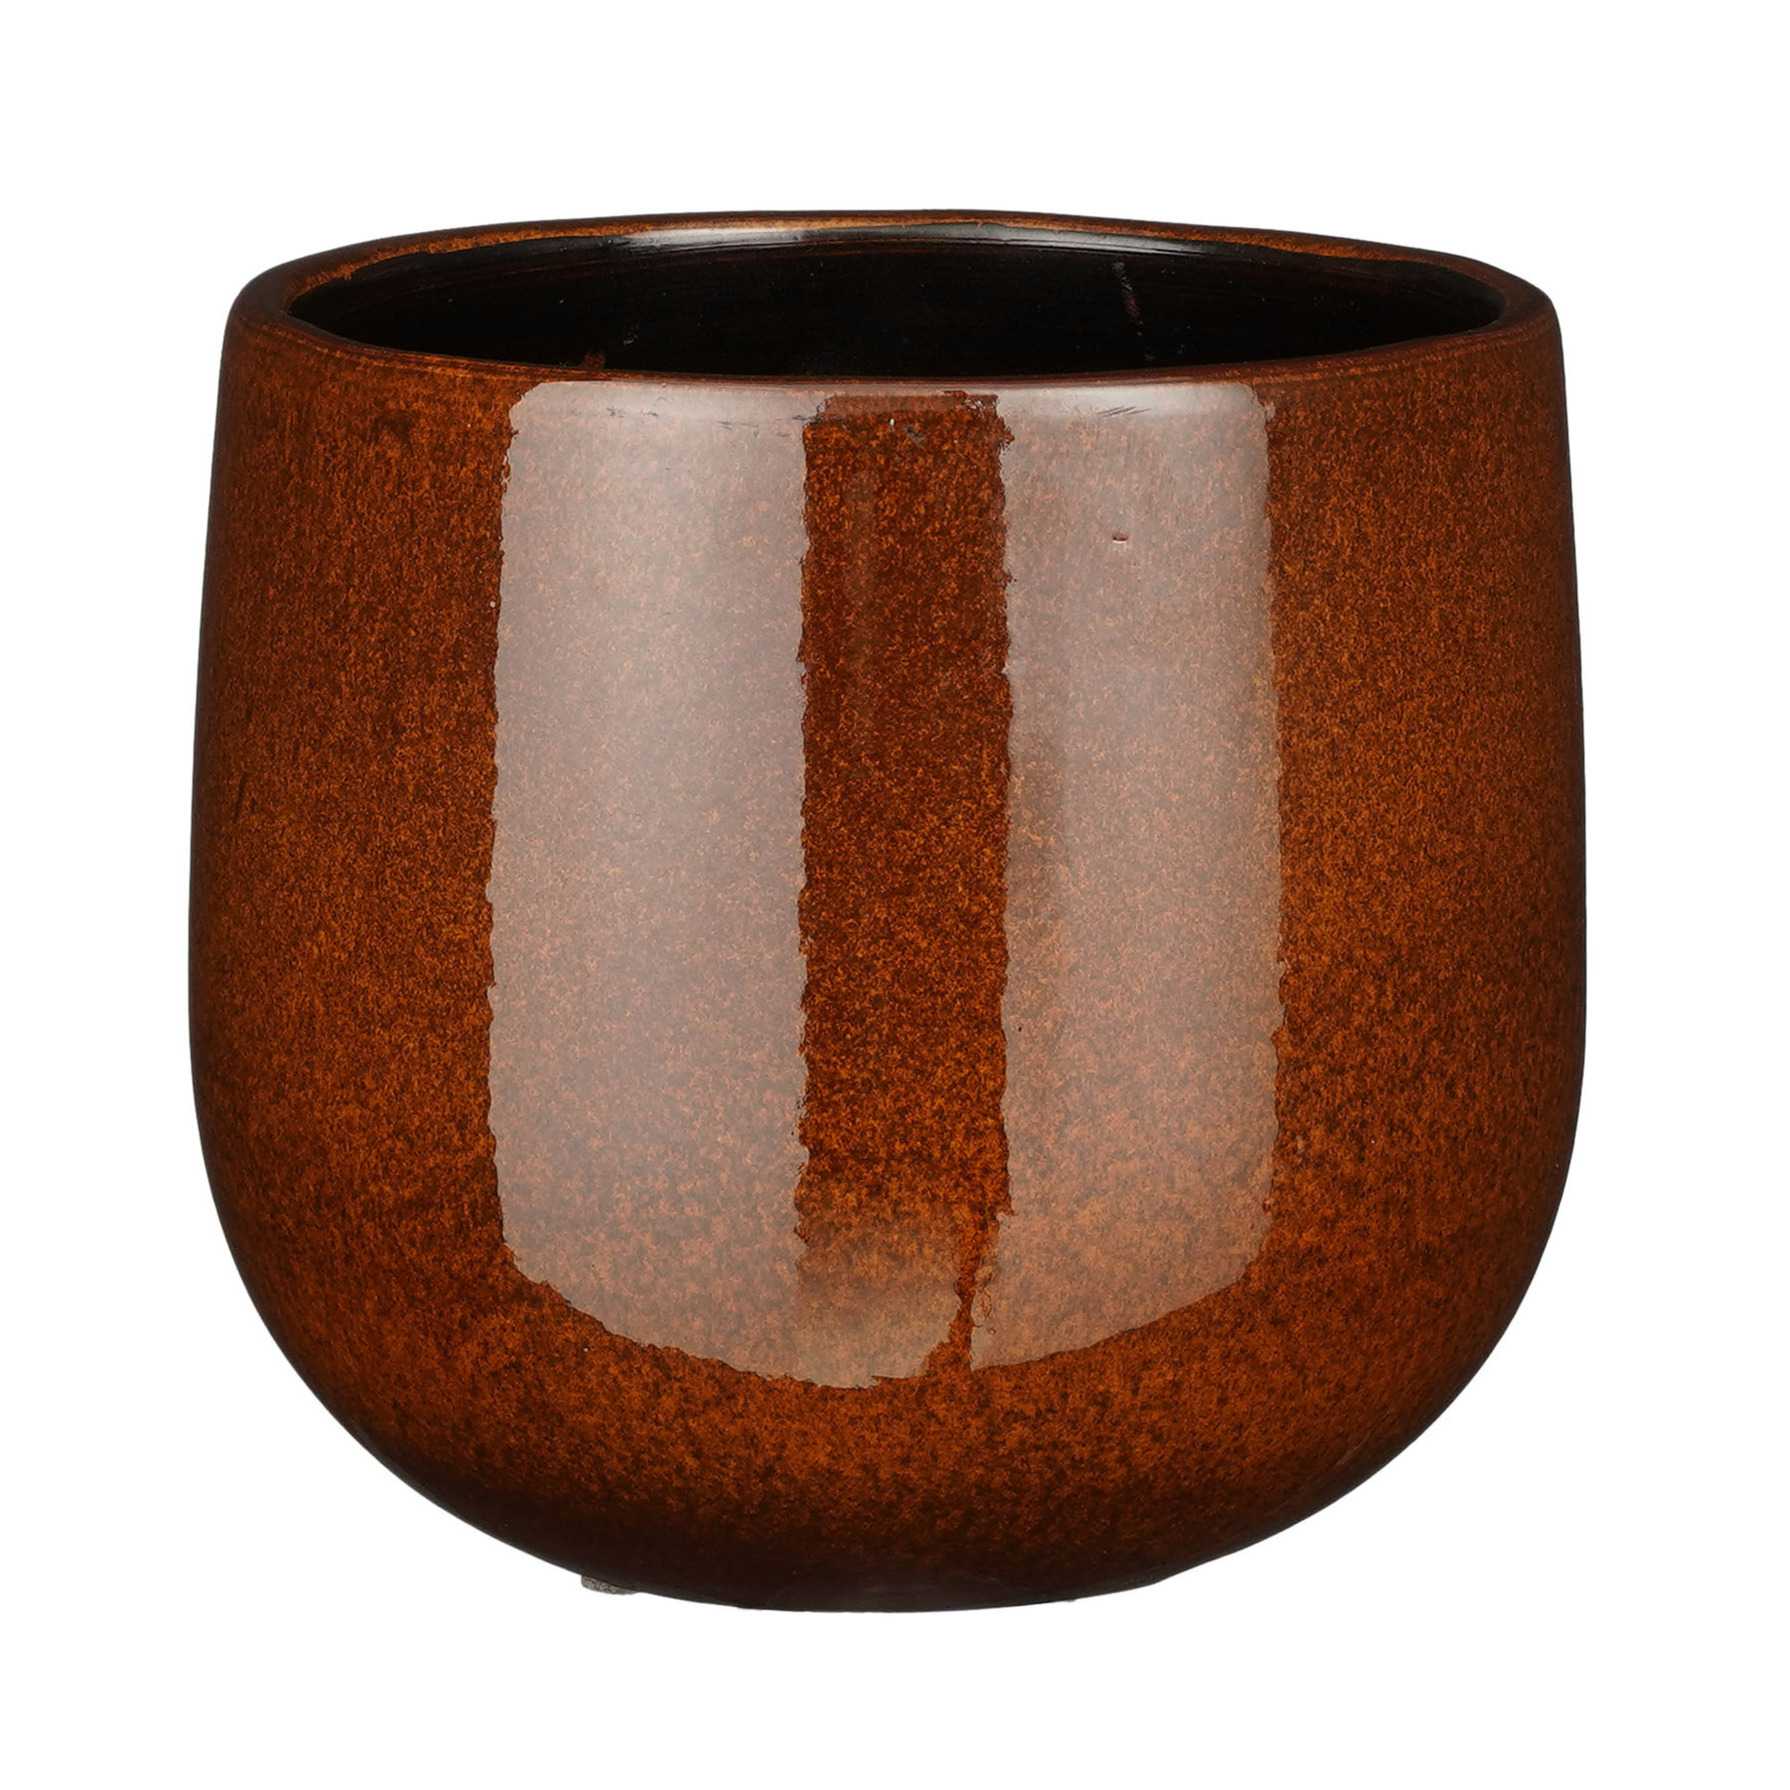 Plantenpot-bloempot keramiek terra bruin speels licht gevlekt patroon D18-H16 cm